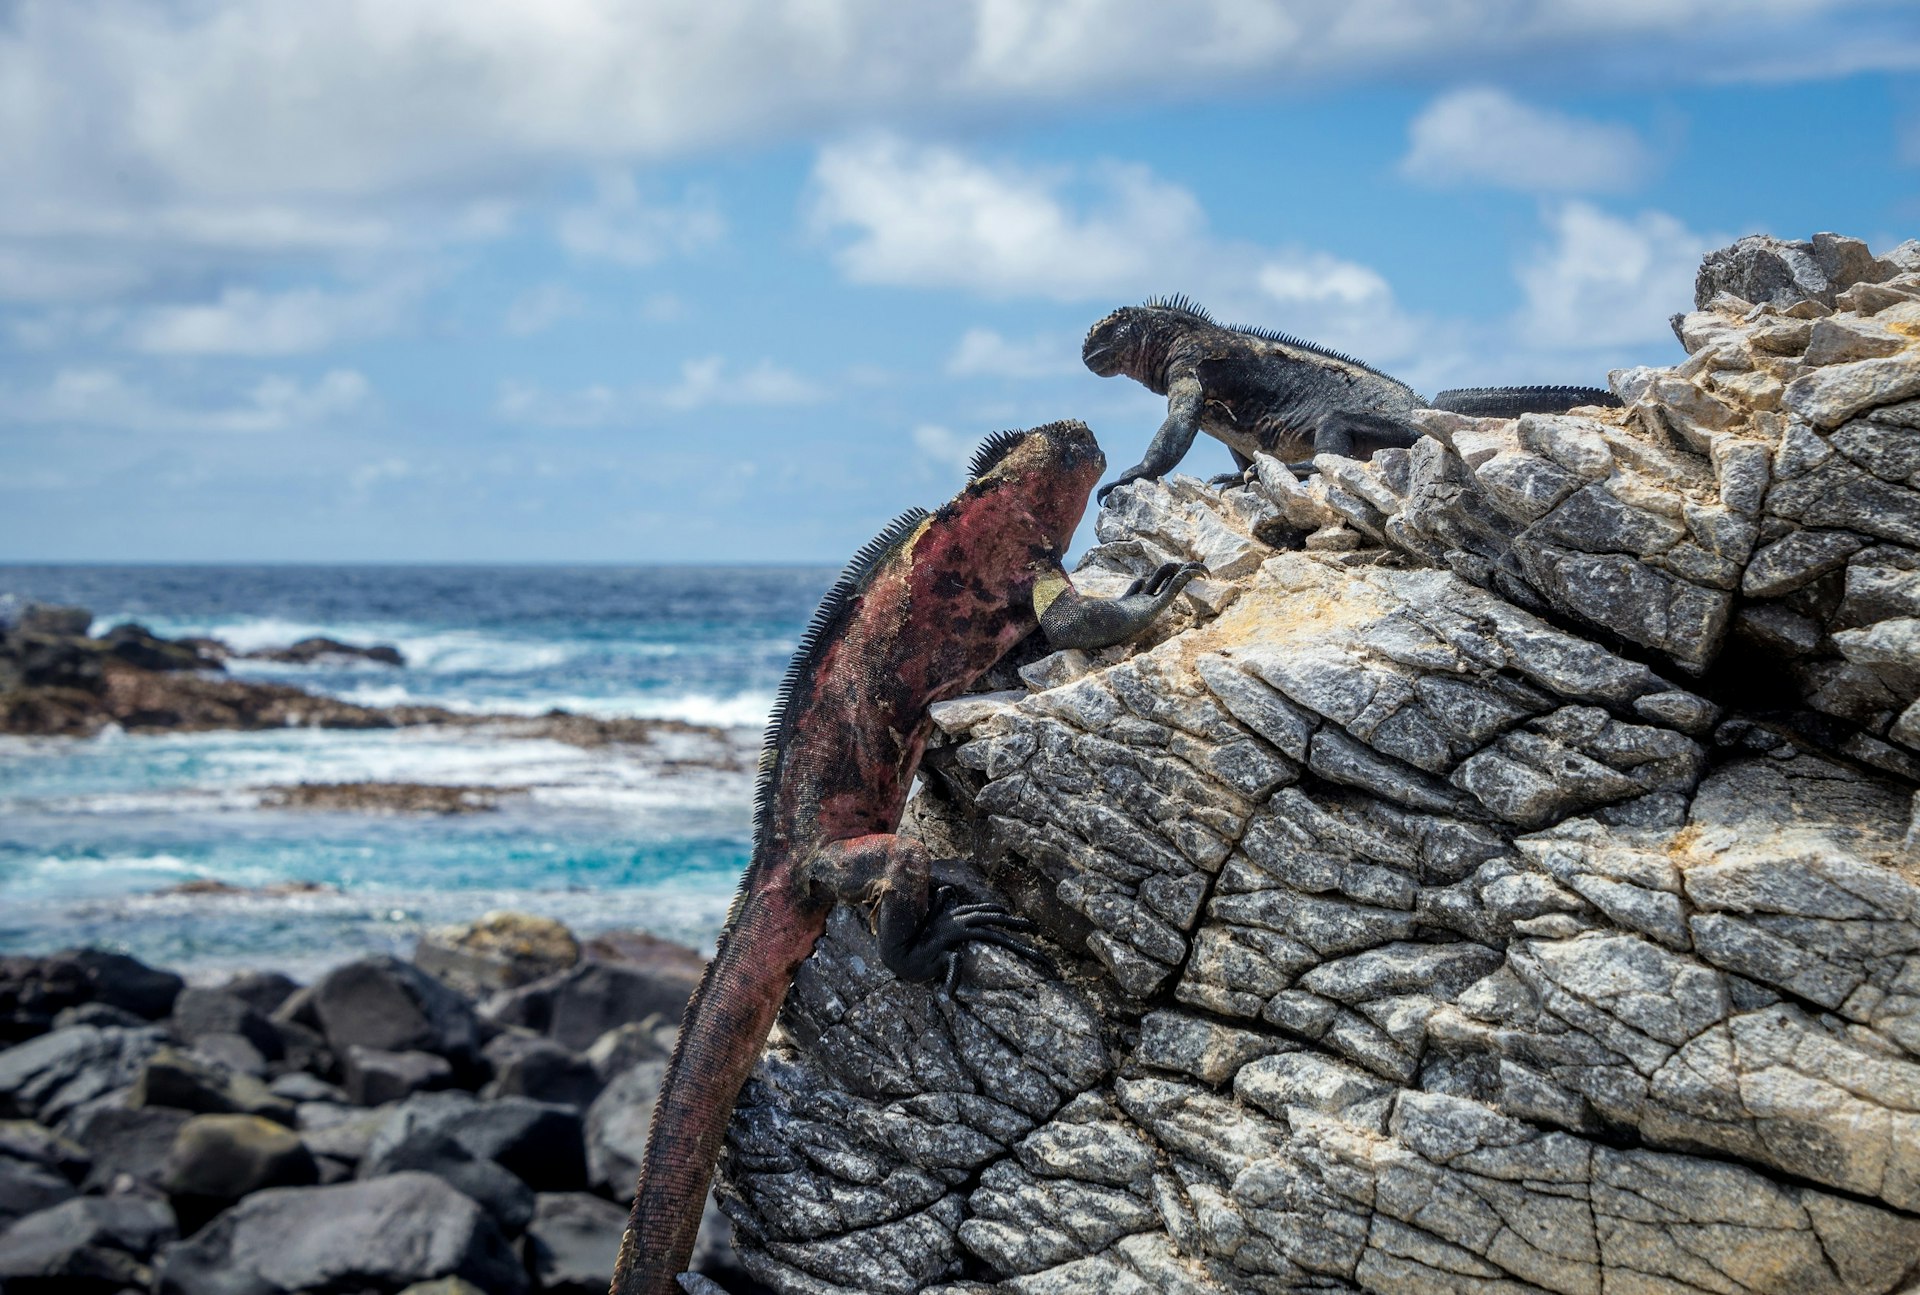 Two marine iguana stand on a rock near the sea